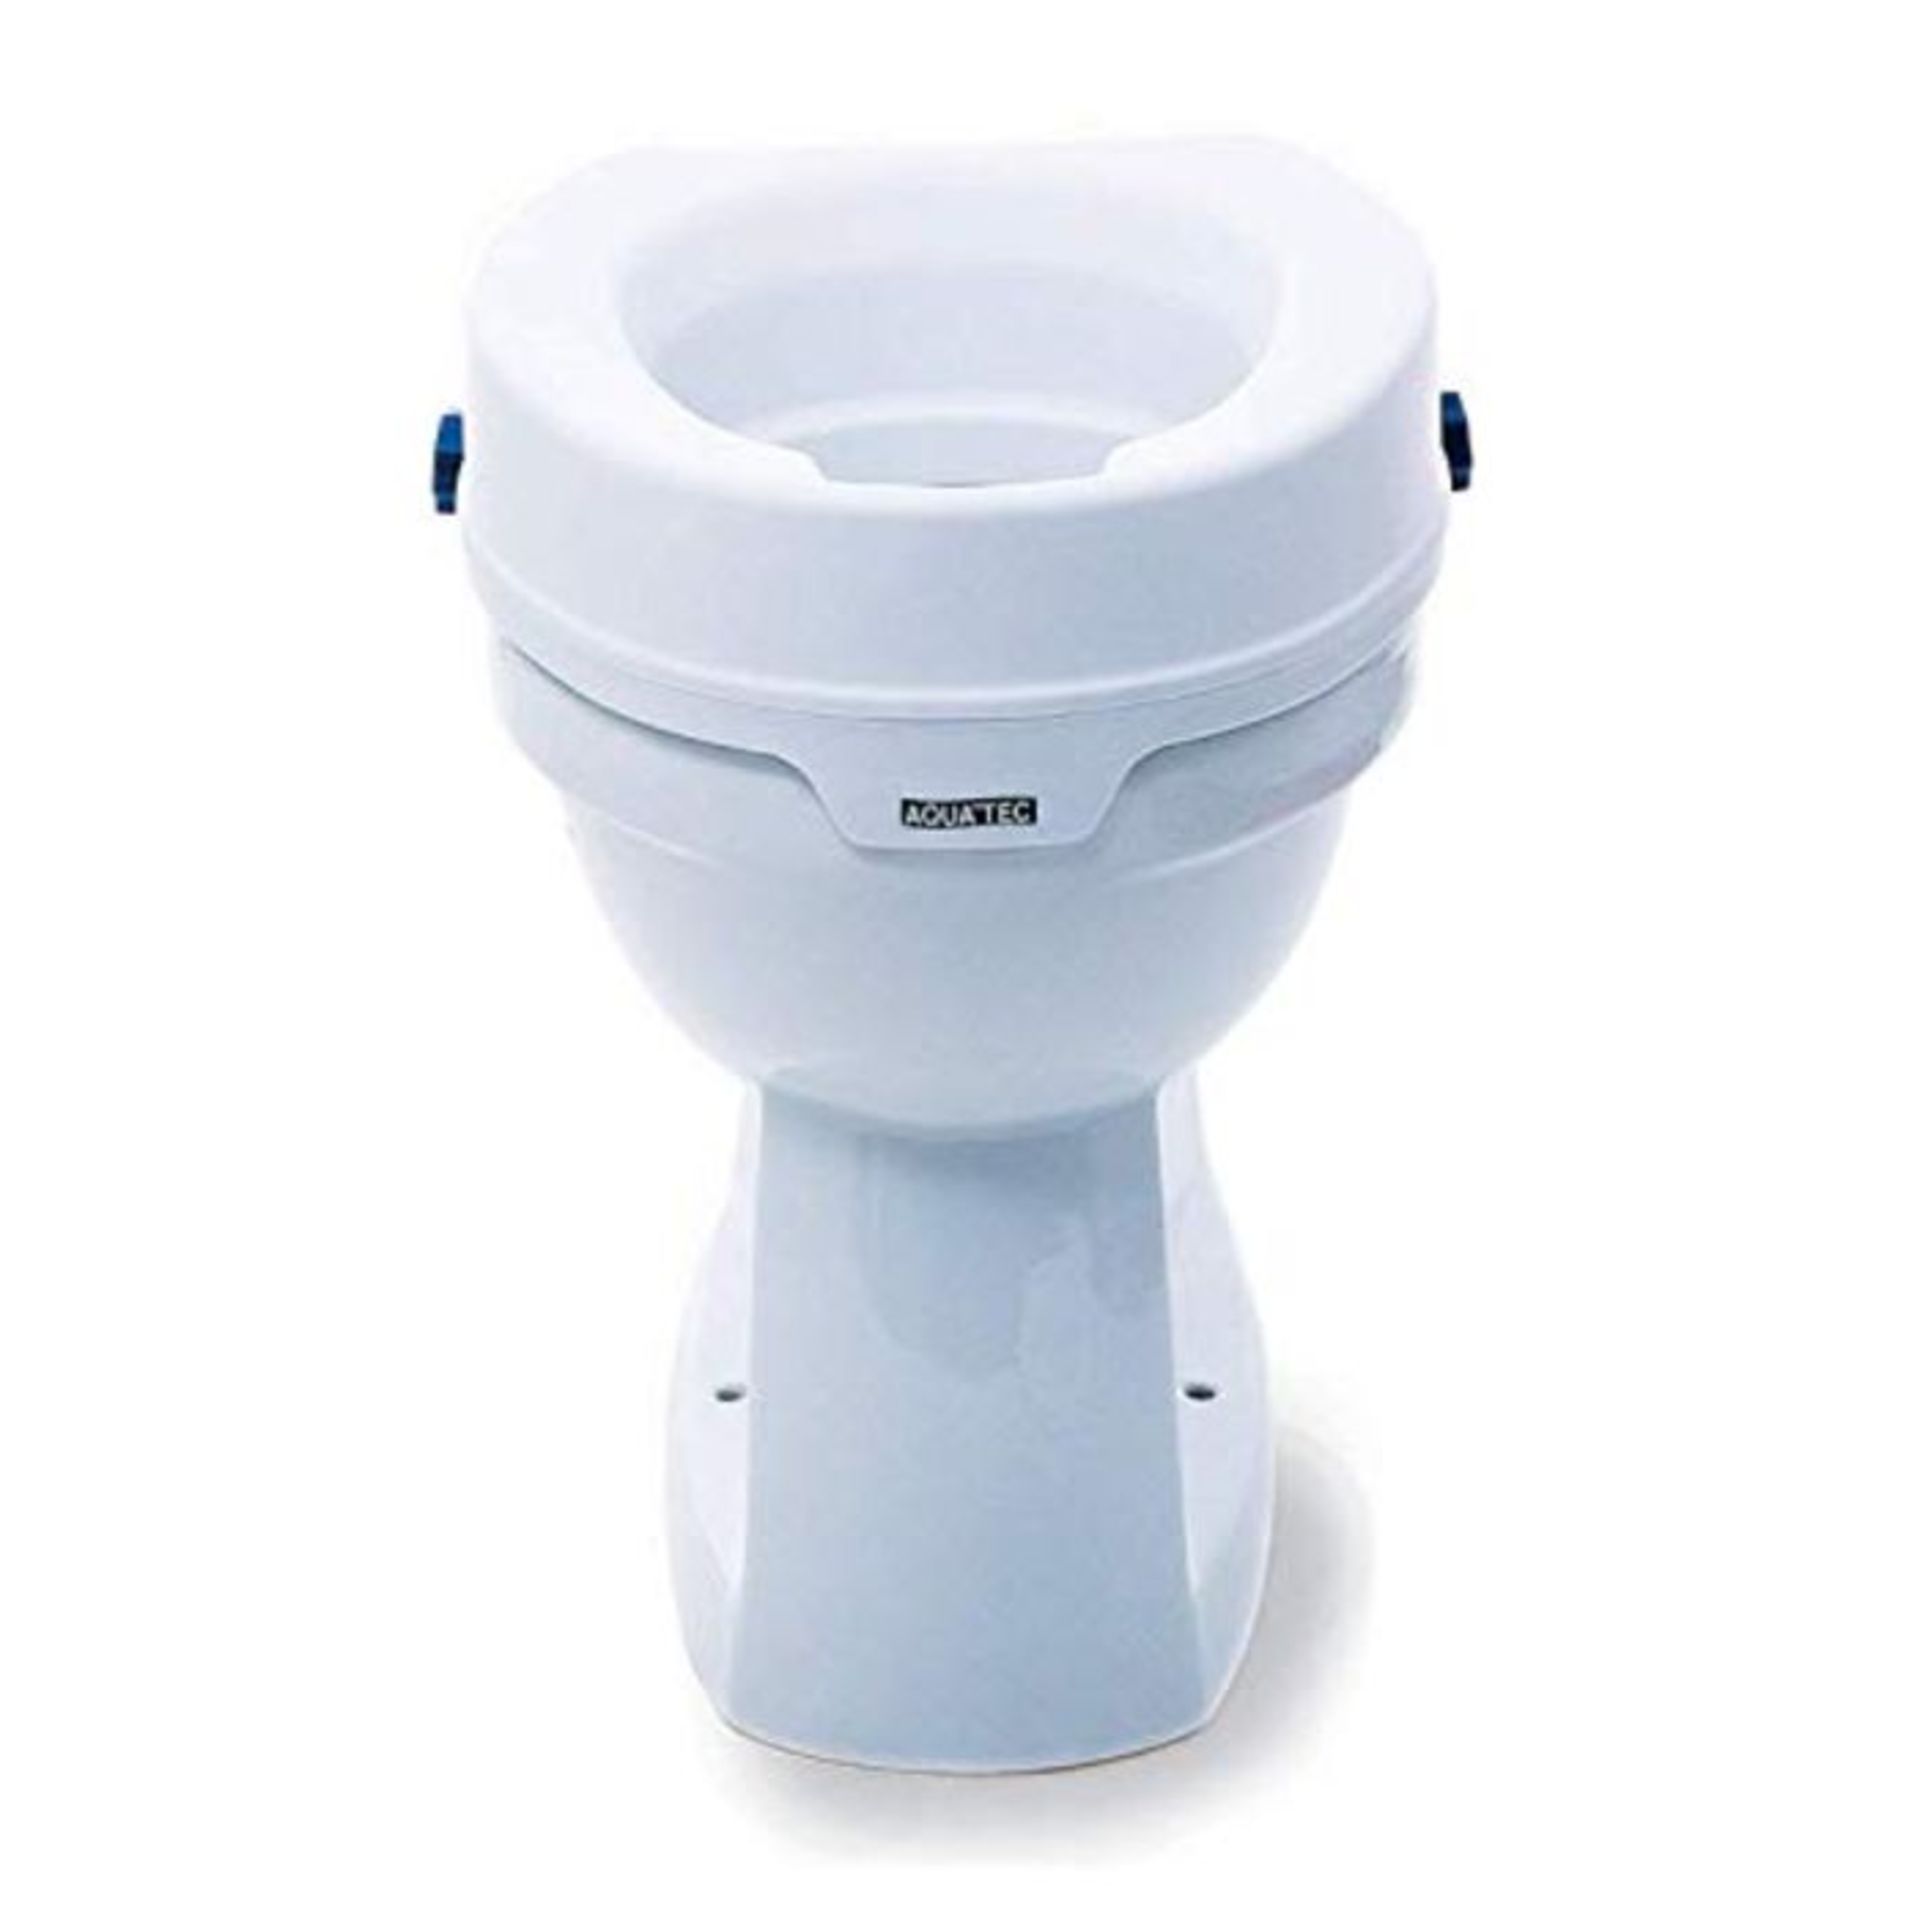 Toilet Seat Raiser- Invacare Aquatec 90 Toilet Seat Raiser Without Lid - Raised Toilet